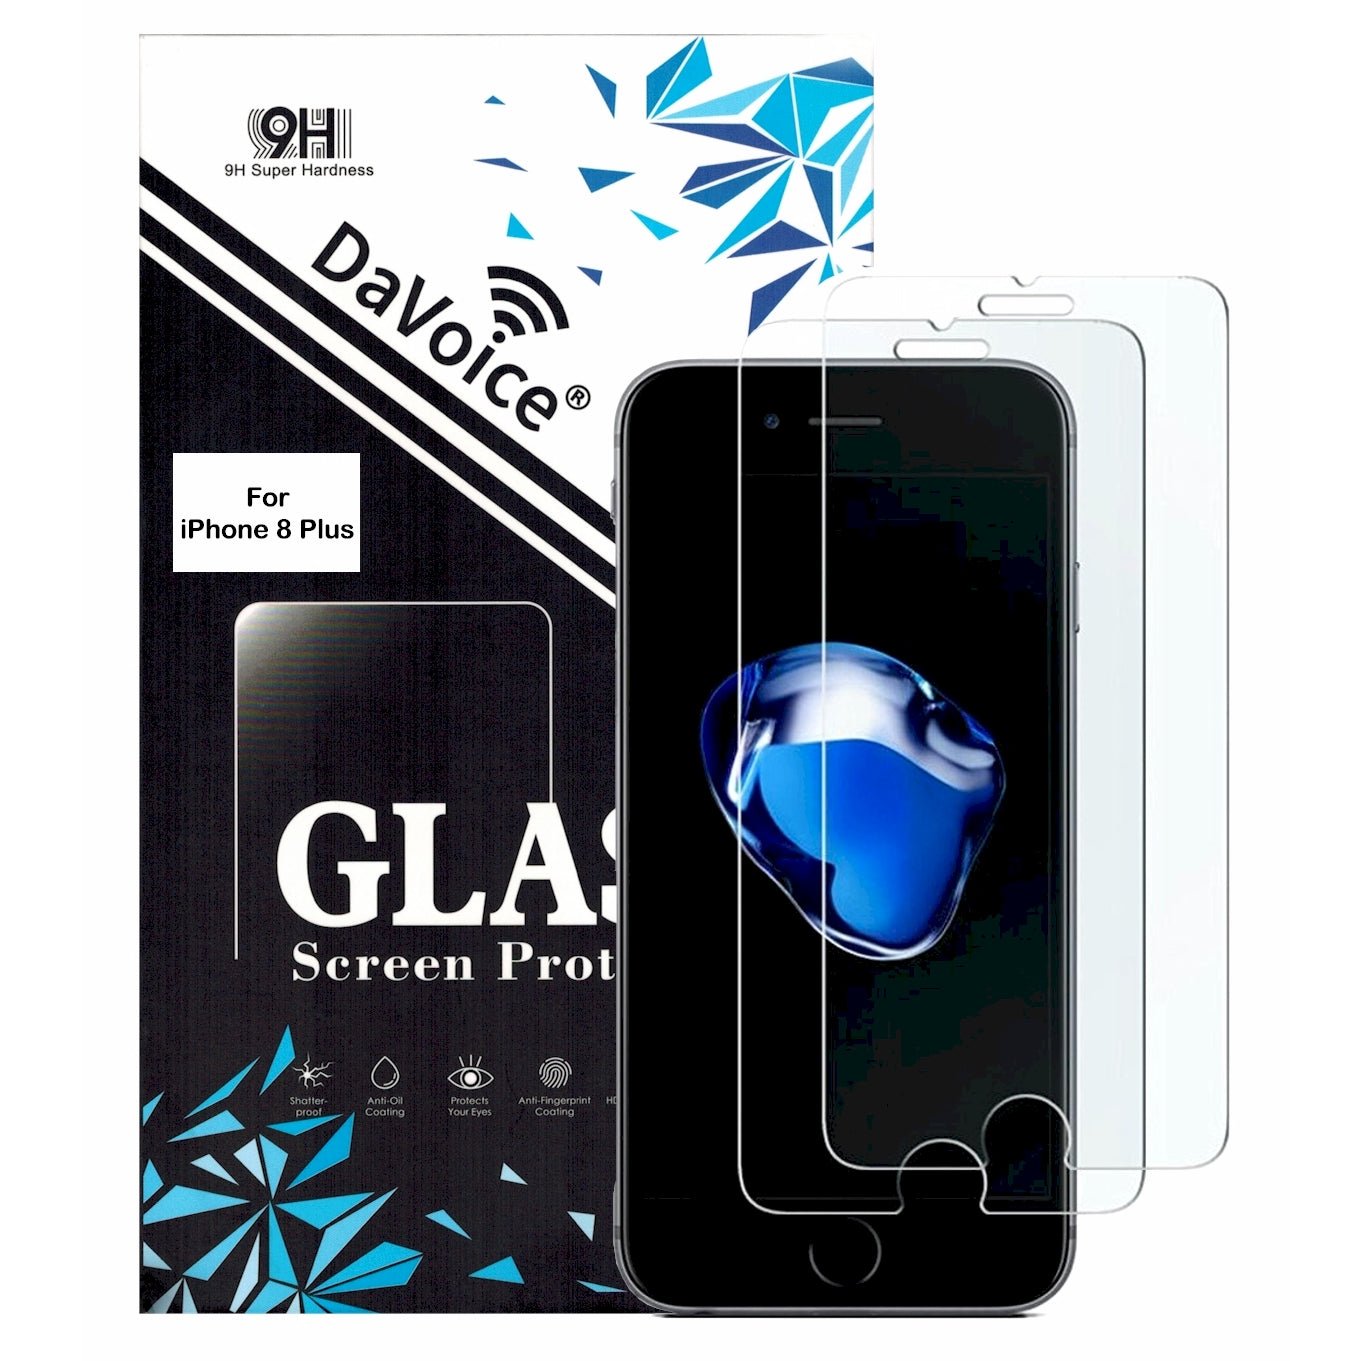 iPhone 8 Plus Screen Protector - 2 Pack